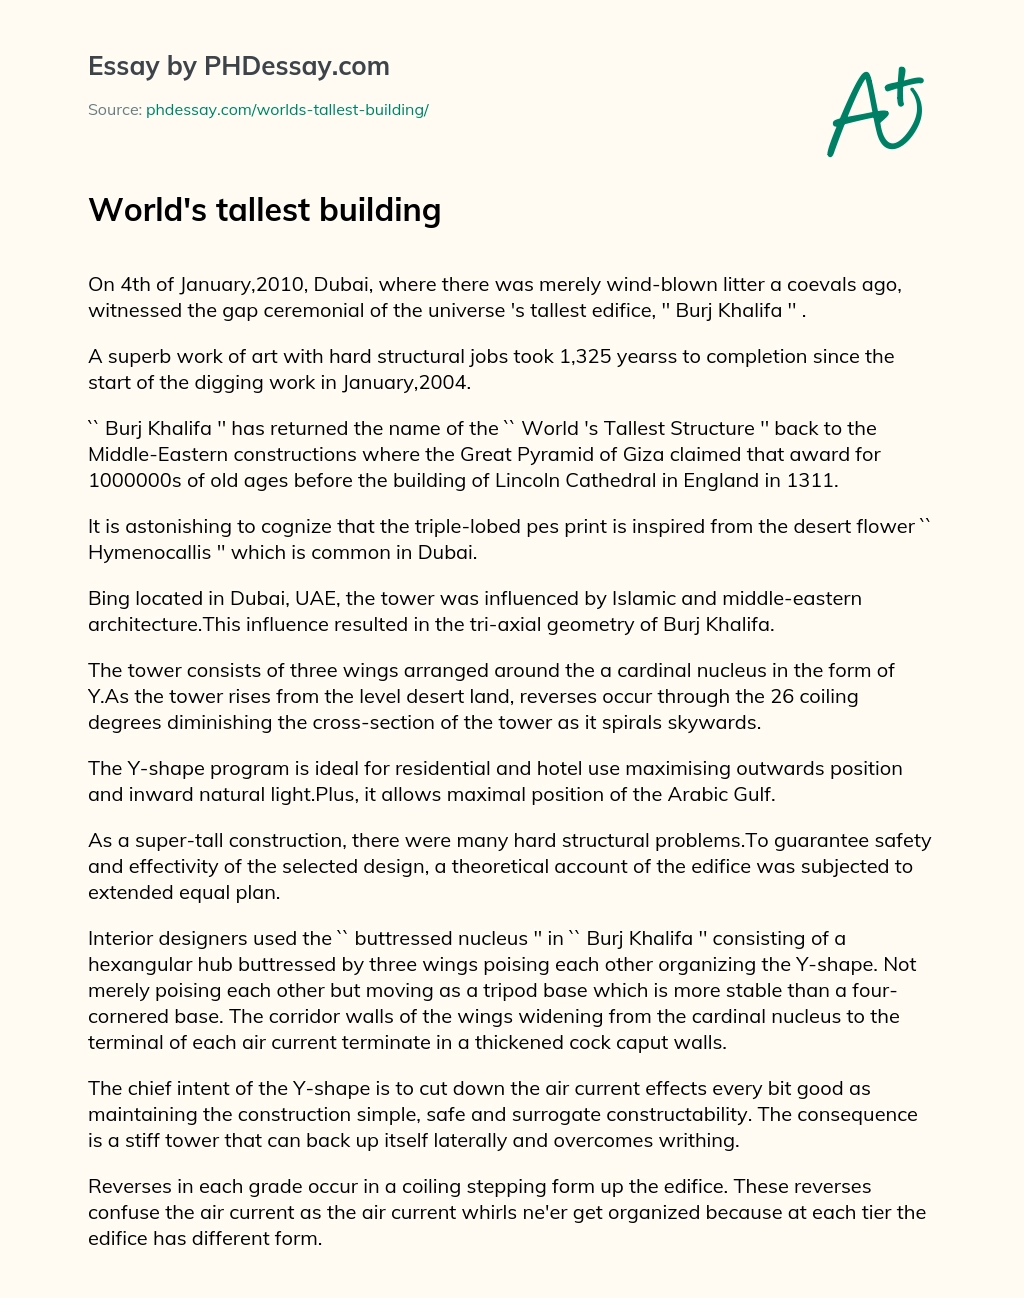 World’s tallest building essay